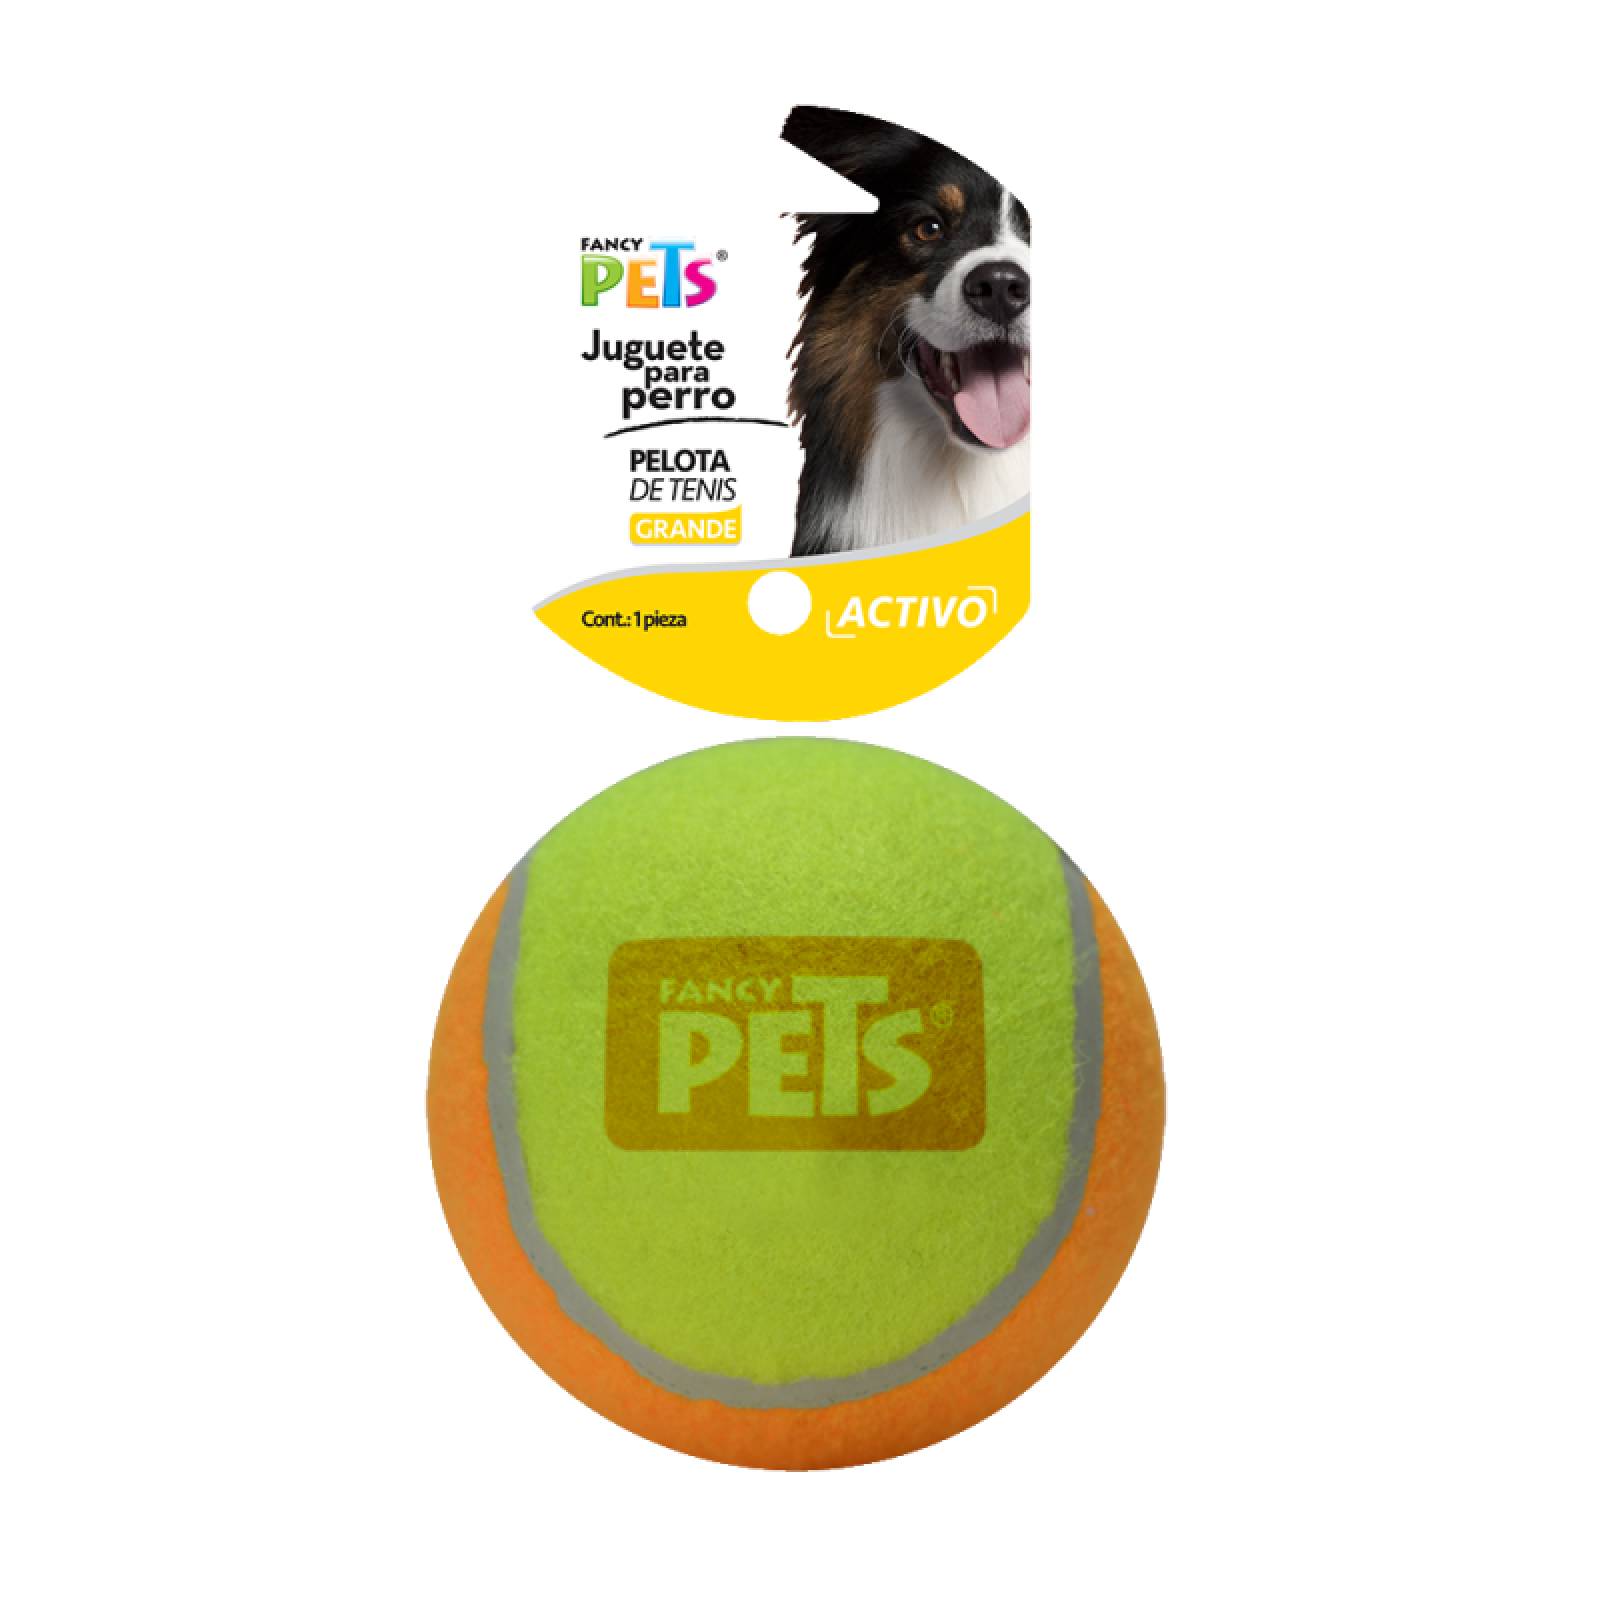 Pelota Tenis Bicolor Grande Juguete Perro Fancy Pets